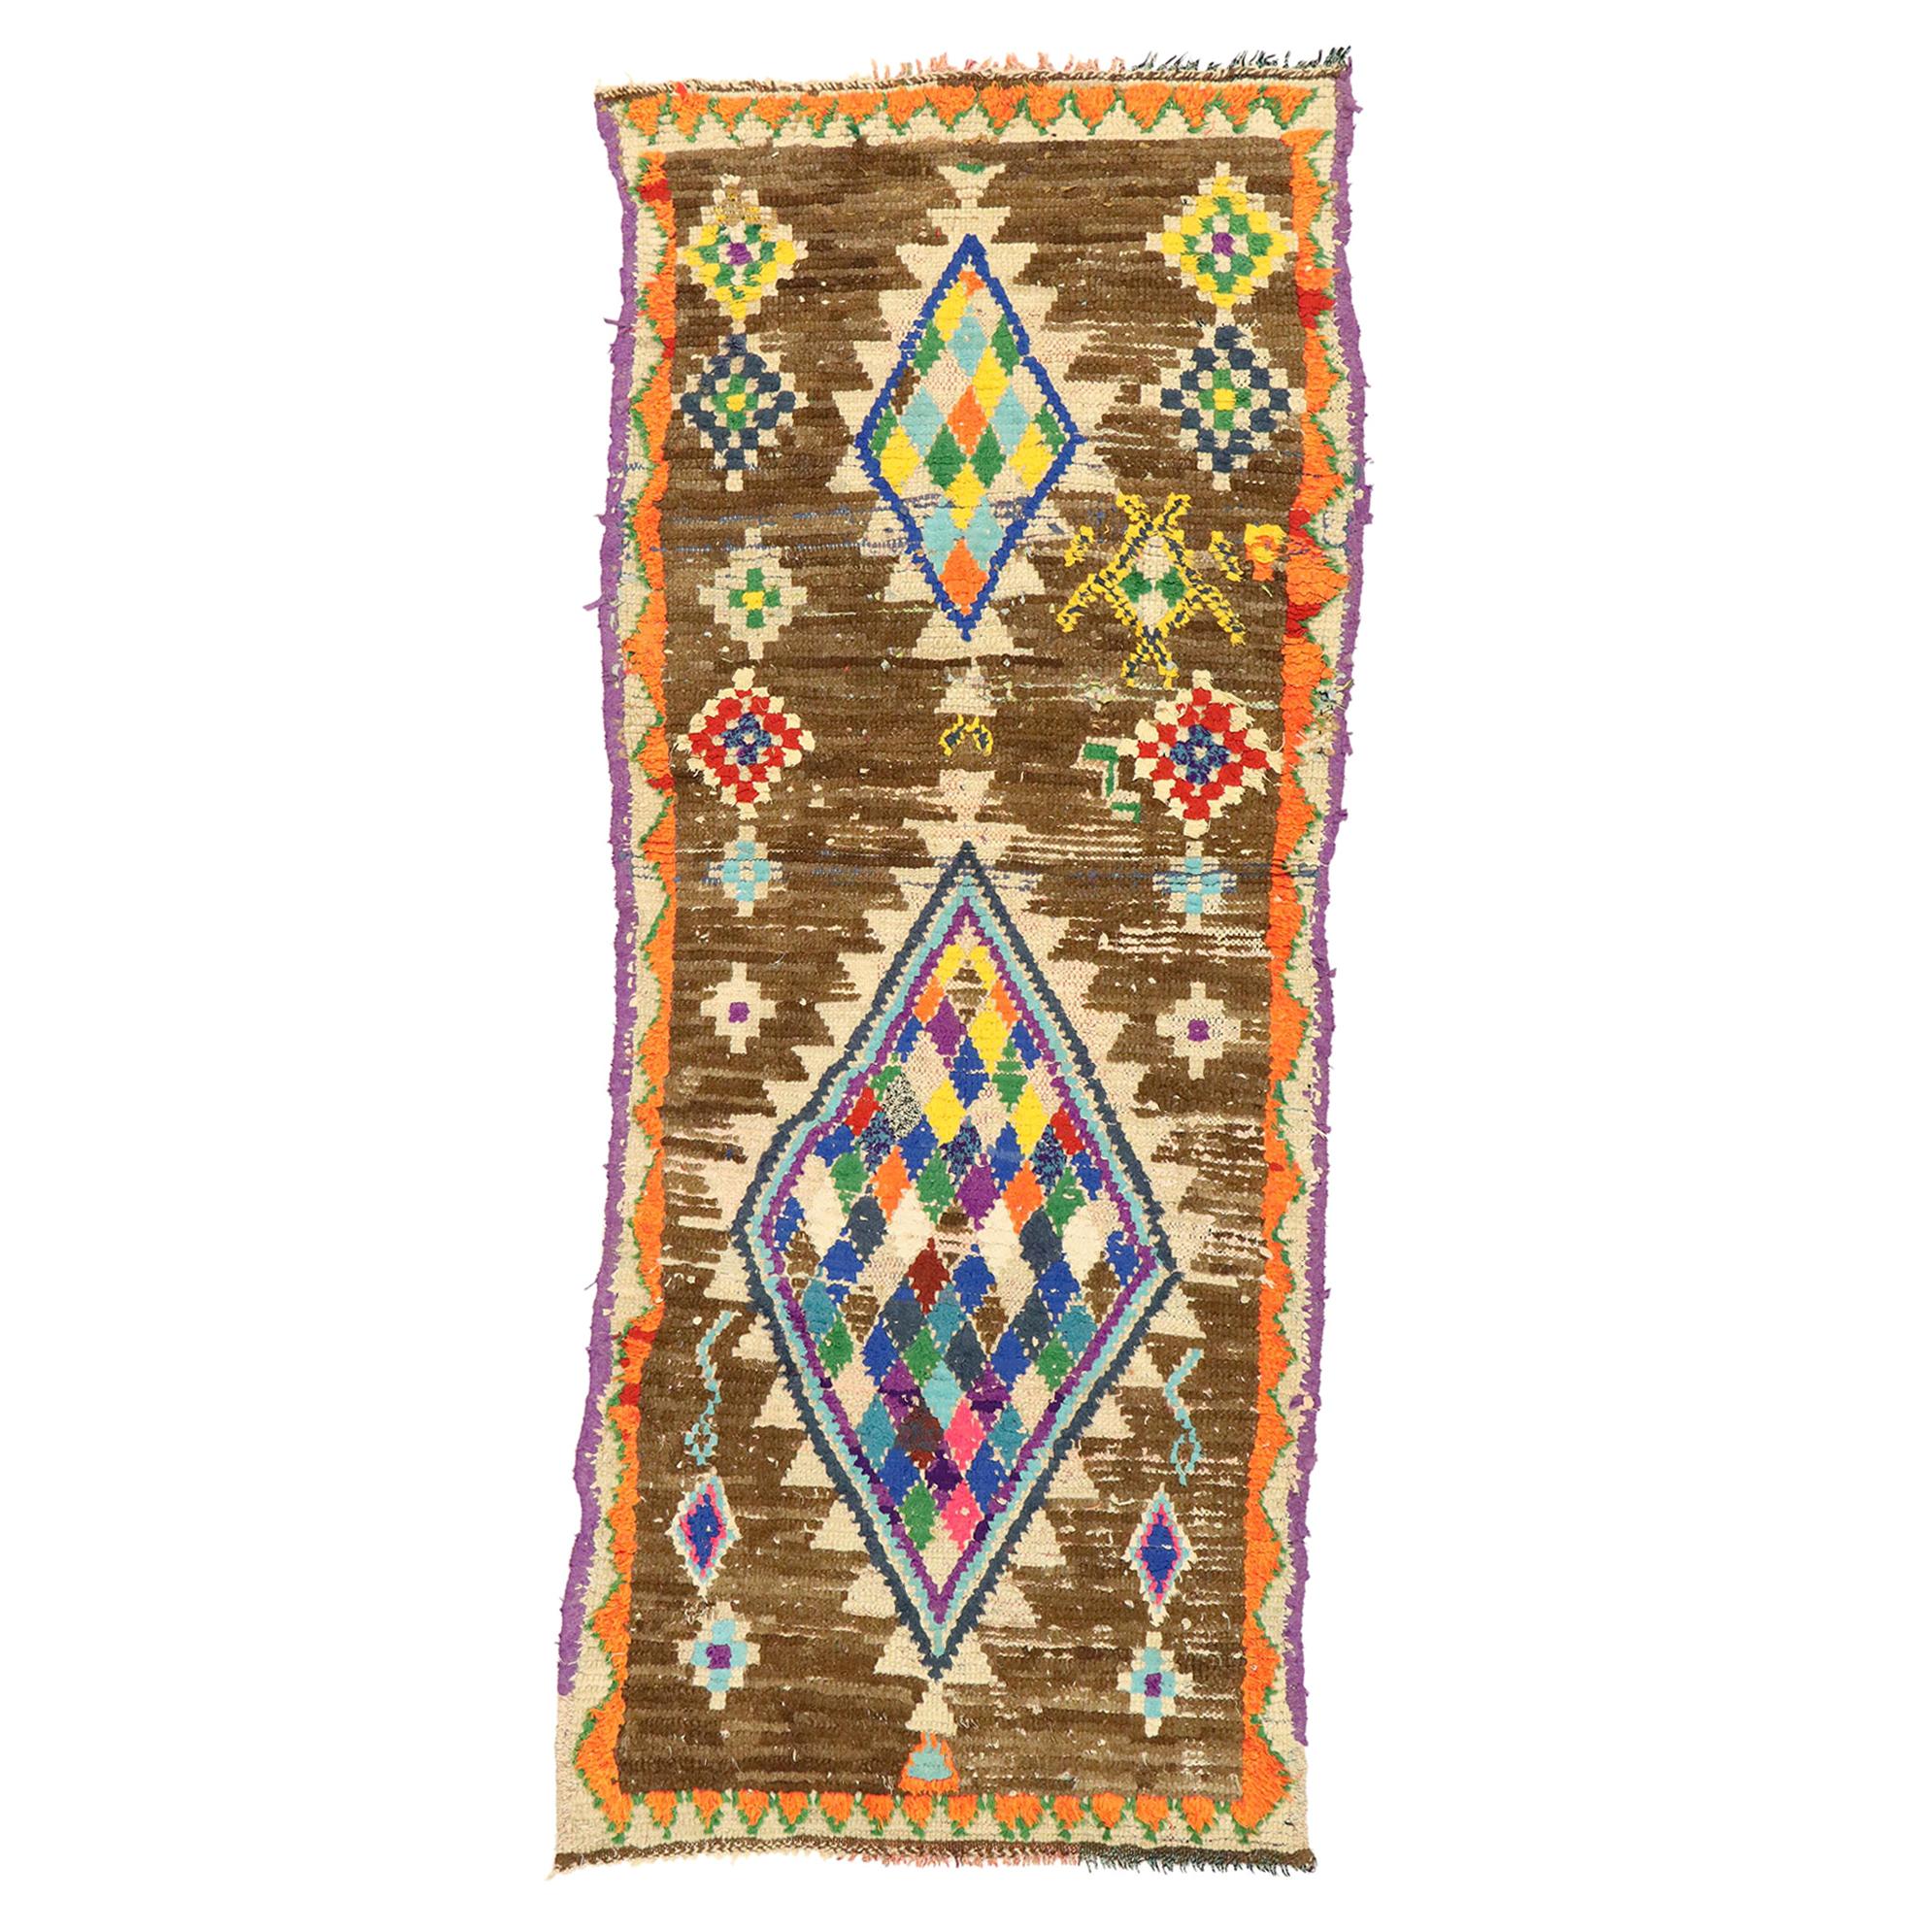 Marokkanischer Azilal Rag-Teppich im Vintage-Stil, Maximalismus Boho Meets Stammeskunst-Enchantment